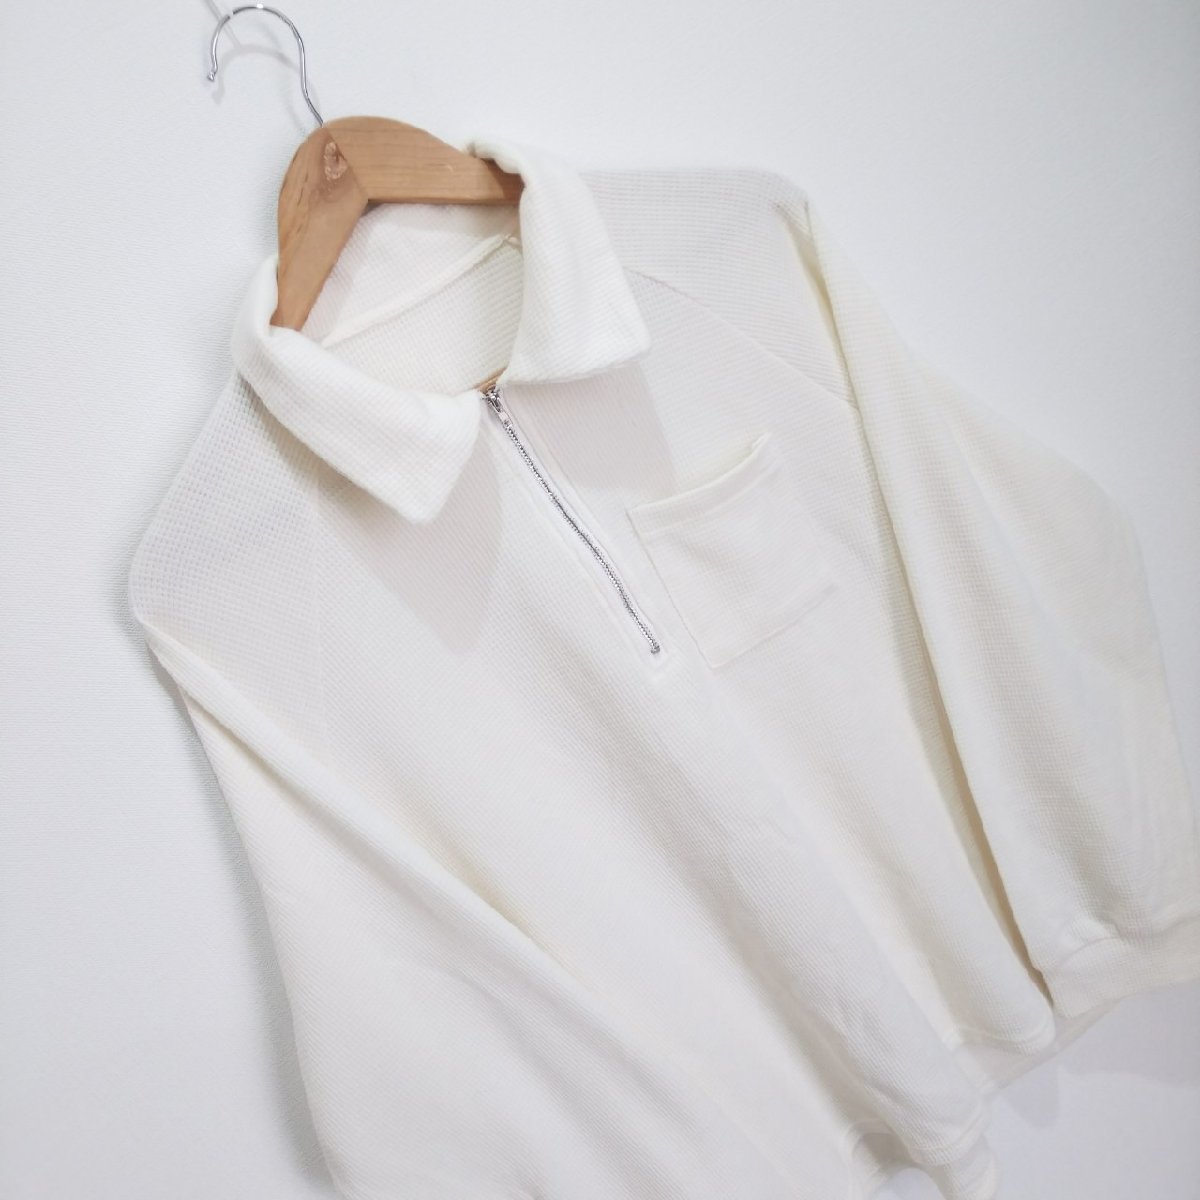 (^w^)b デイジー ハーフジップ スウェット Tシャツ プルオーバー ホワイト 胸ポケット 無地 きれいめ シンプル カジュアル DAZY L_画像5